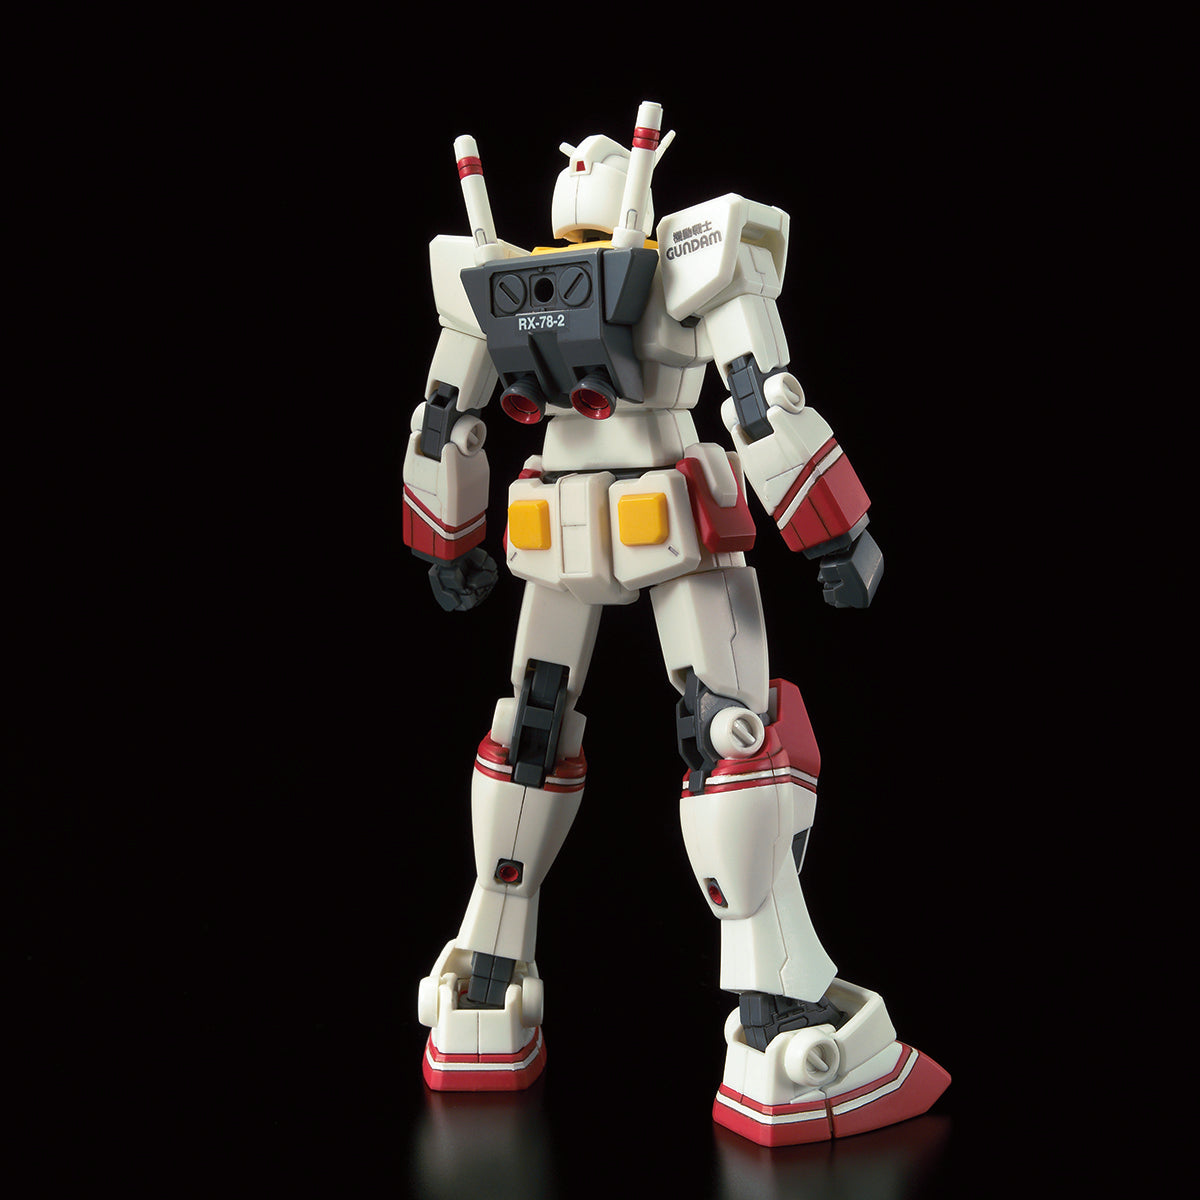 Gundam 1/144 HGUC RX-78-2 Gundam (PR Ambassador of the Japan Pavilion Expo 2020 Dubai) Model Kit Exclusive